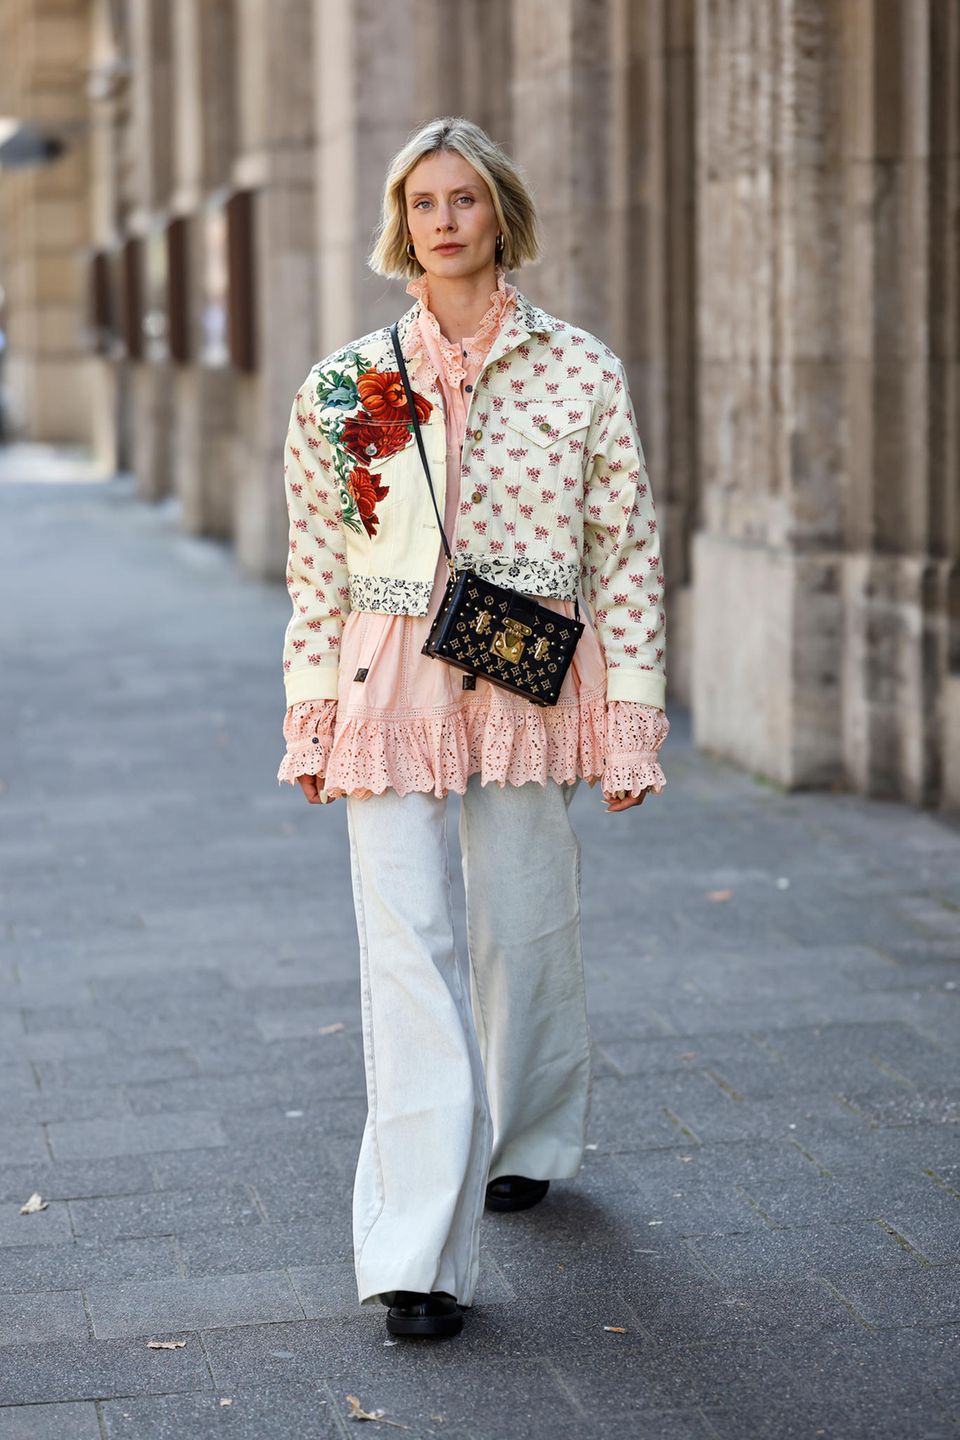 Geblümte Jacke: Frau trägt eine kurze Jacke mit Blumenmuster